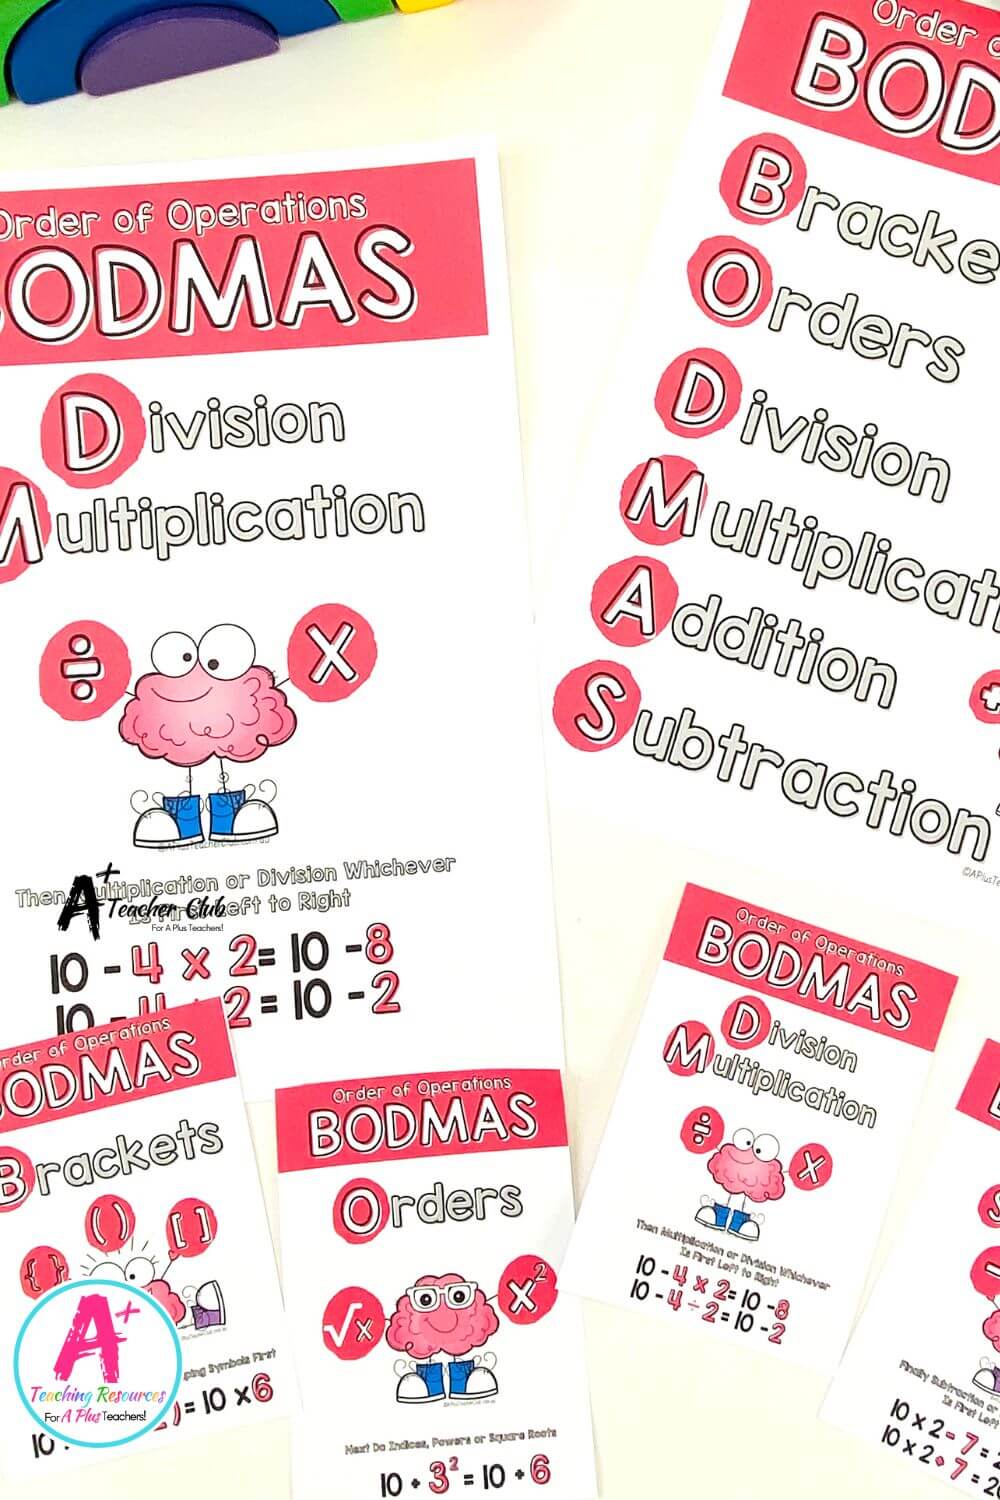 BODMAS Posters